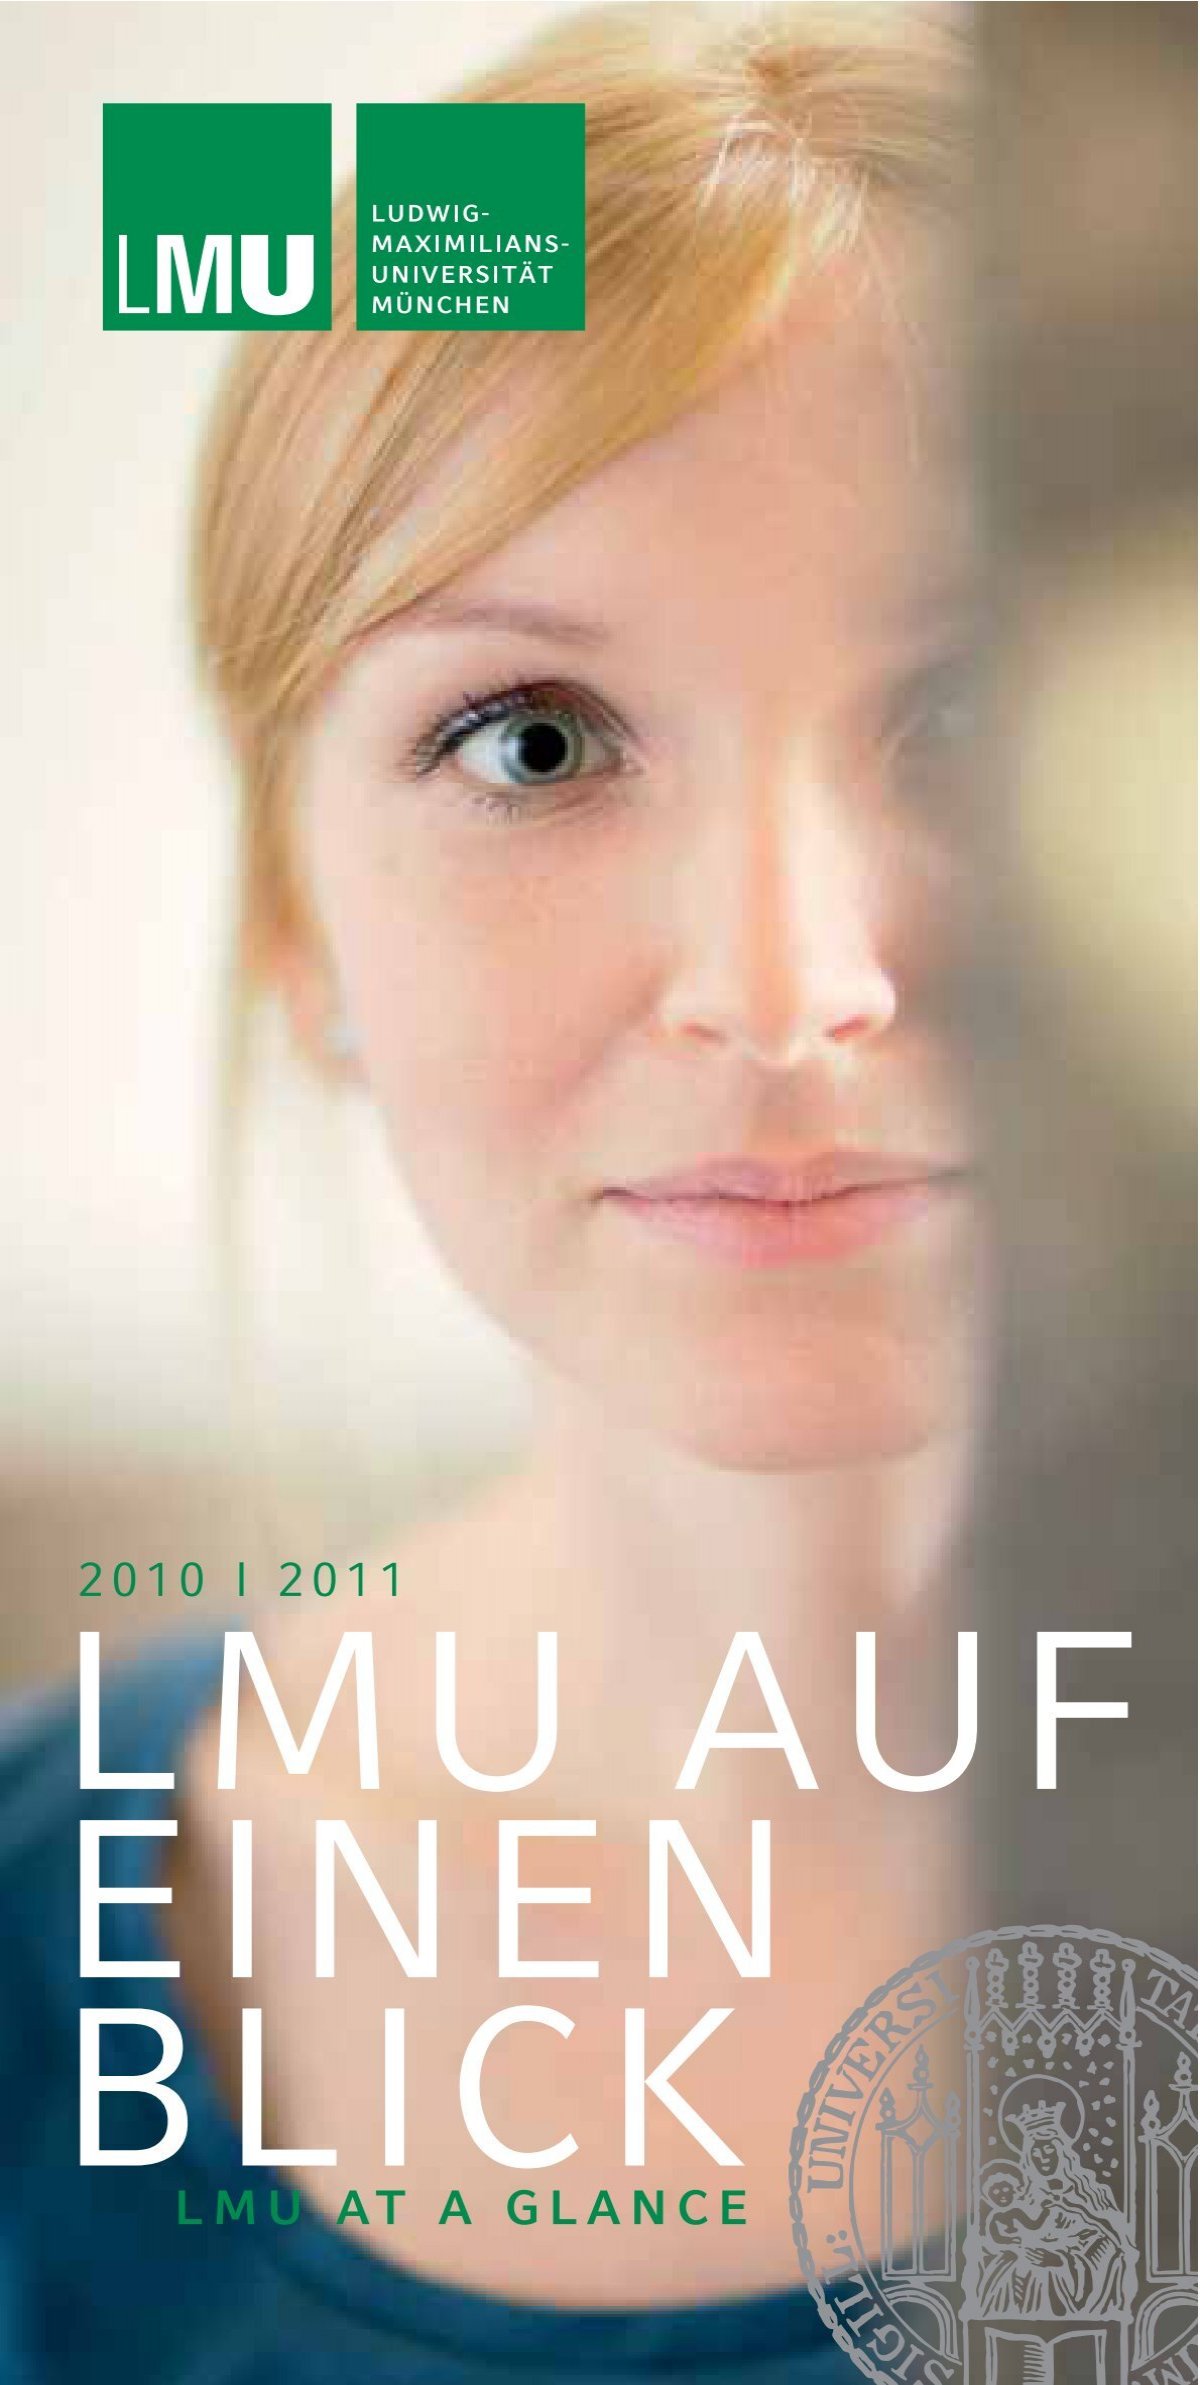 Lmu Auf Einen Blick Ludwig Maximilians Universitat Munchen